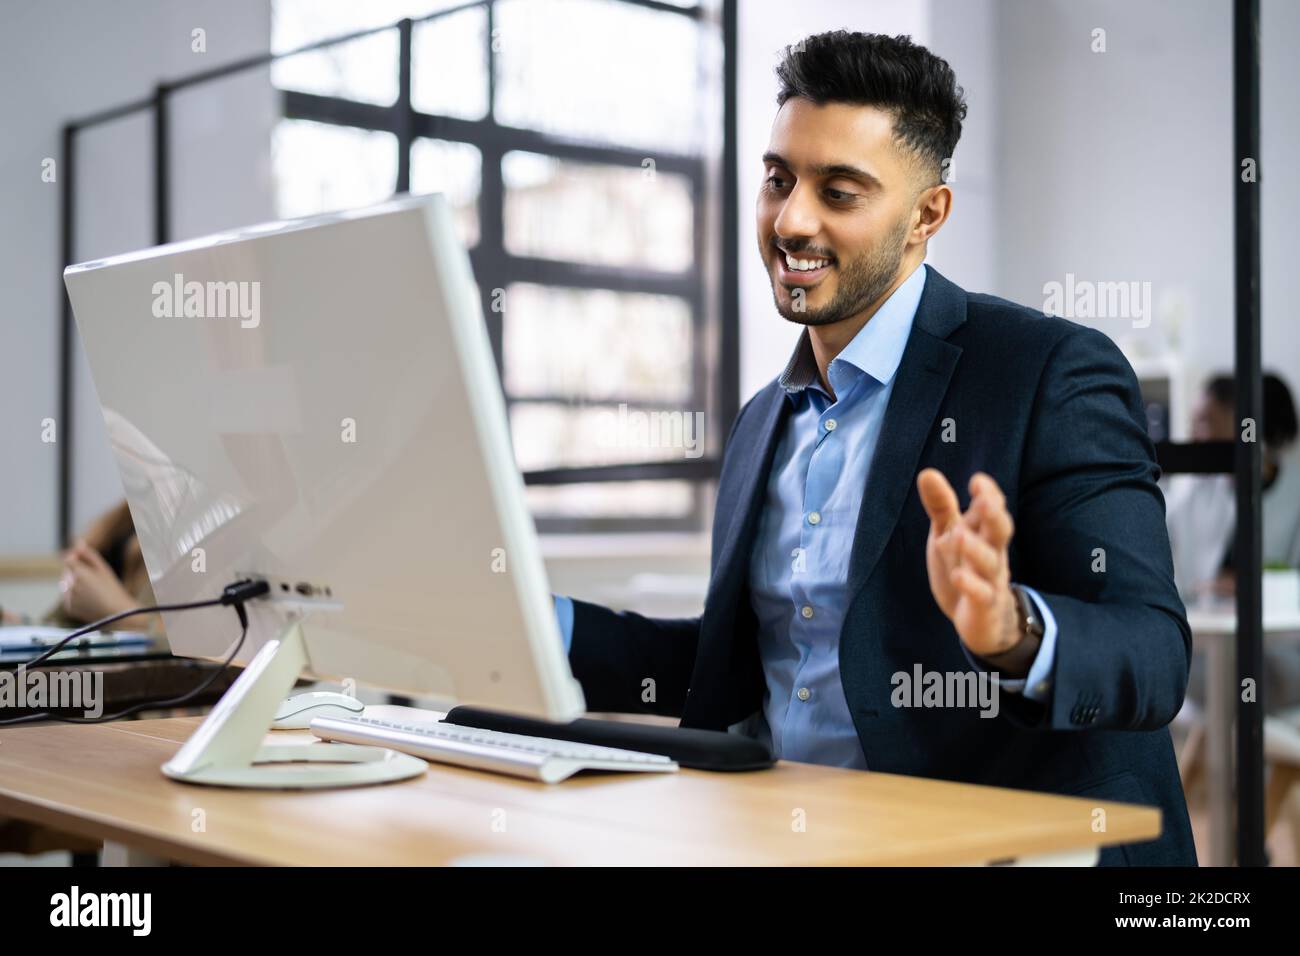 Happy Professional Man Employee Using Computer Stock Photo